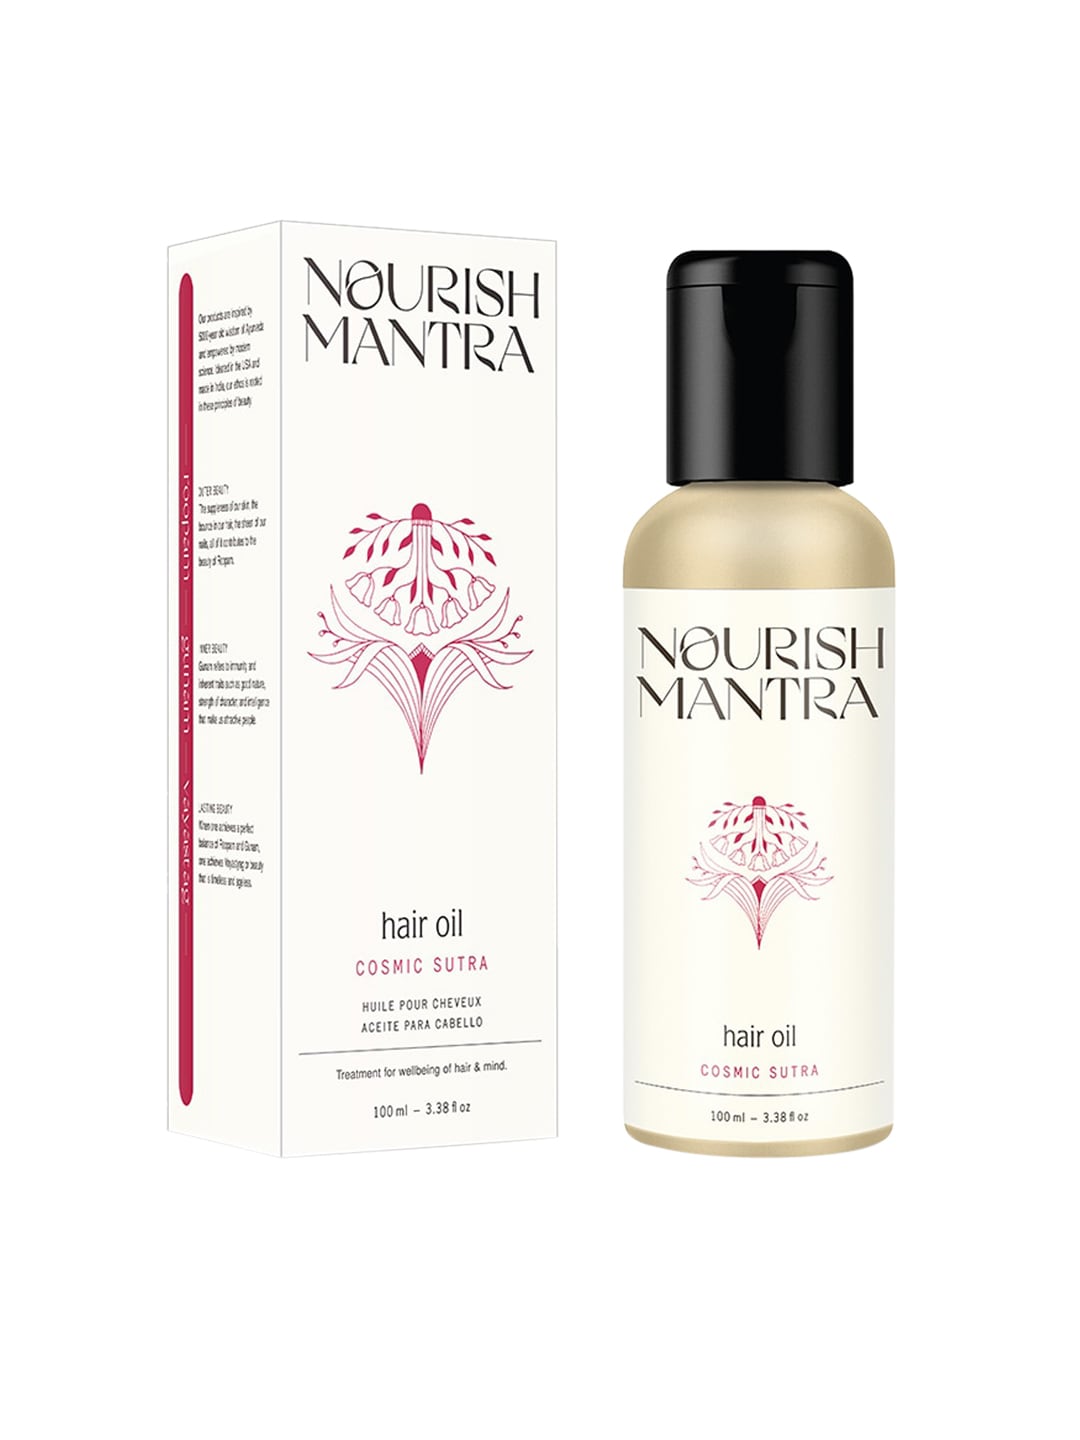 Nourish Mantra Cosmic Sutra Hair Oil 100 ml Price in India